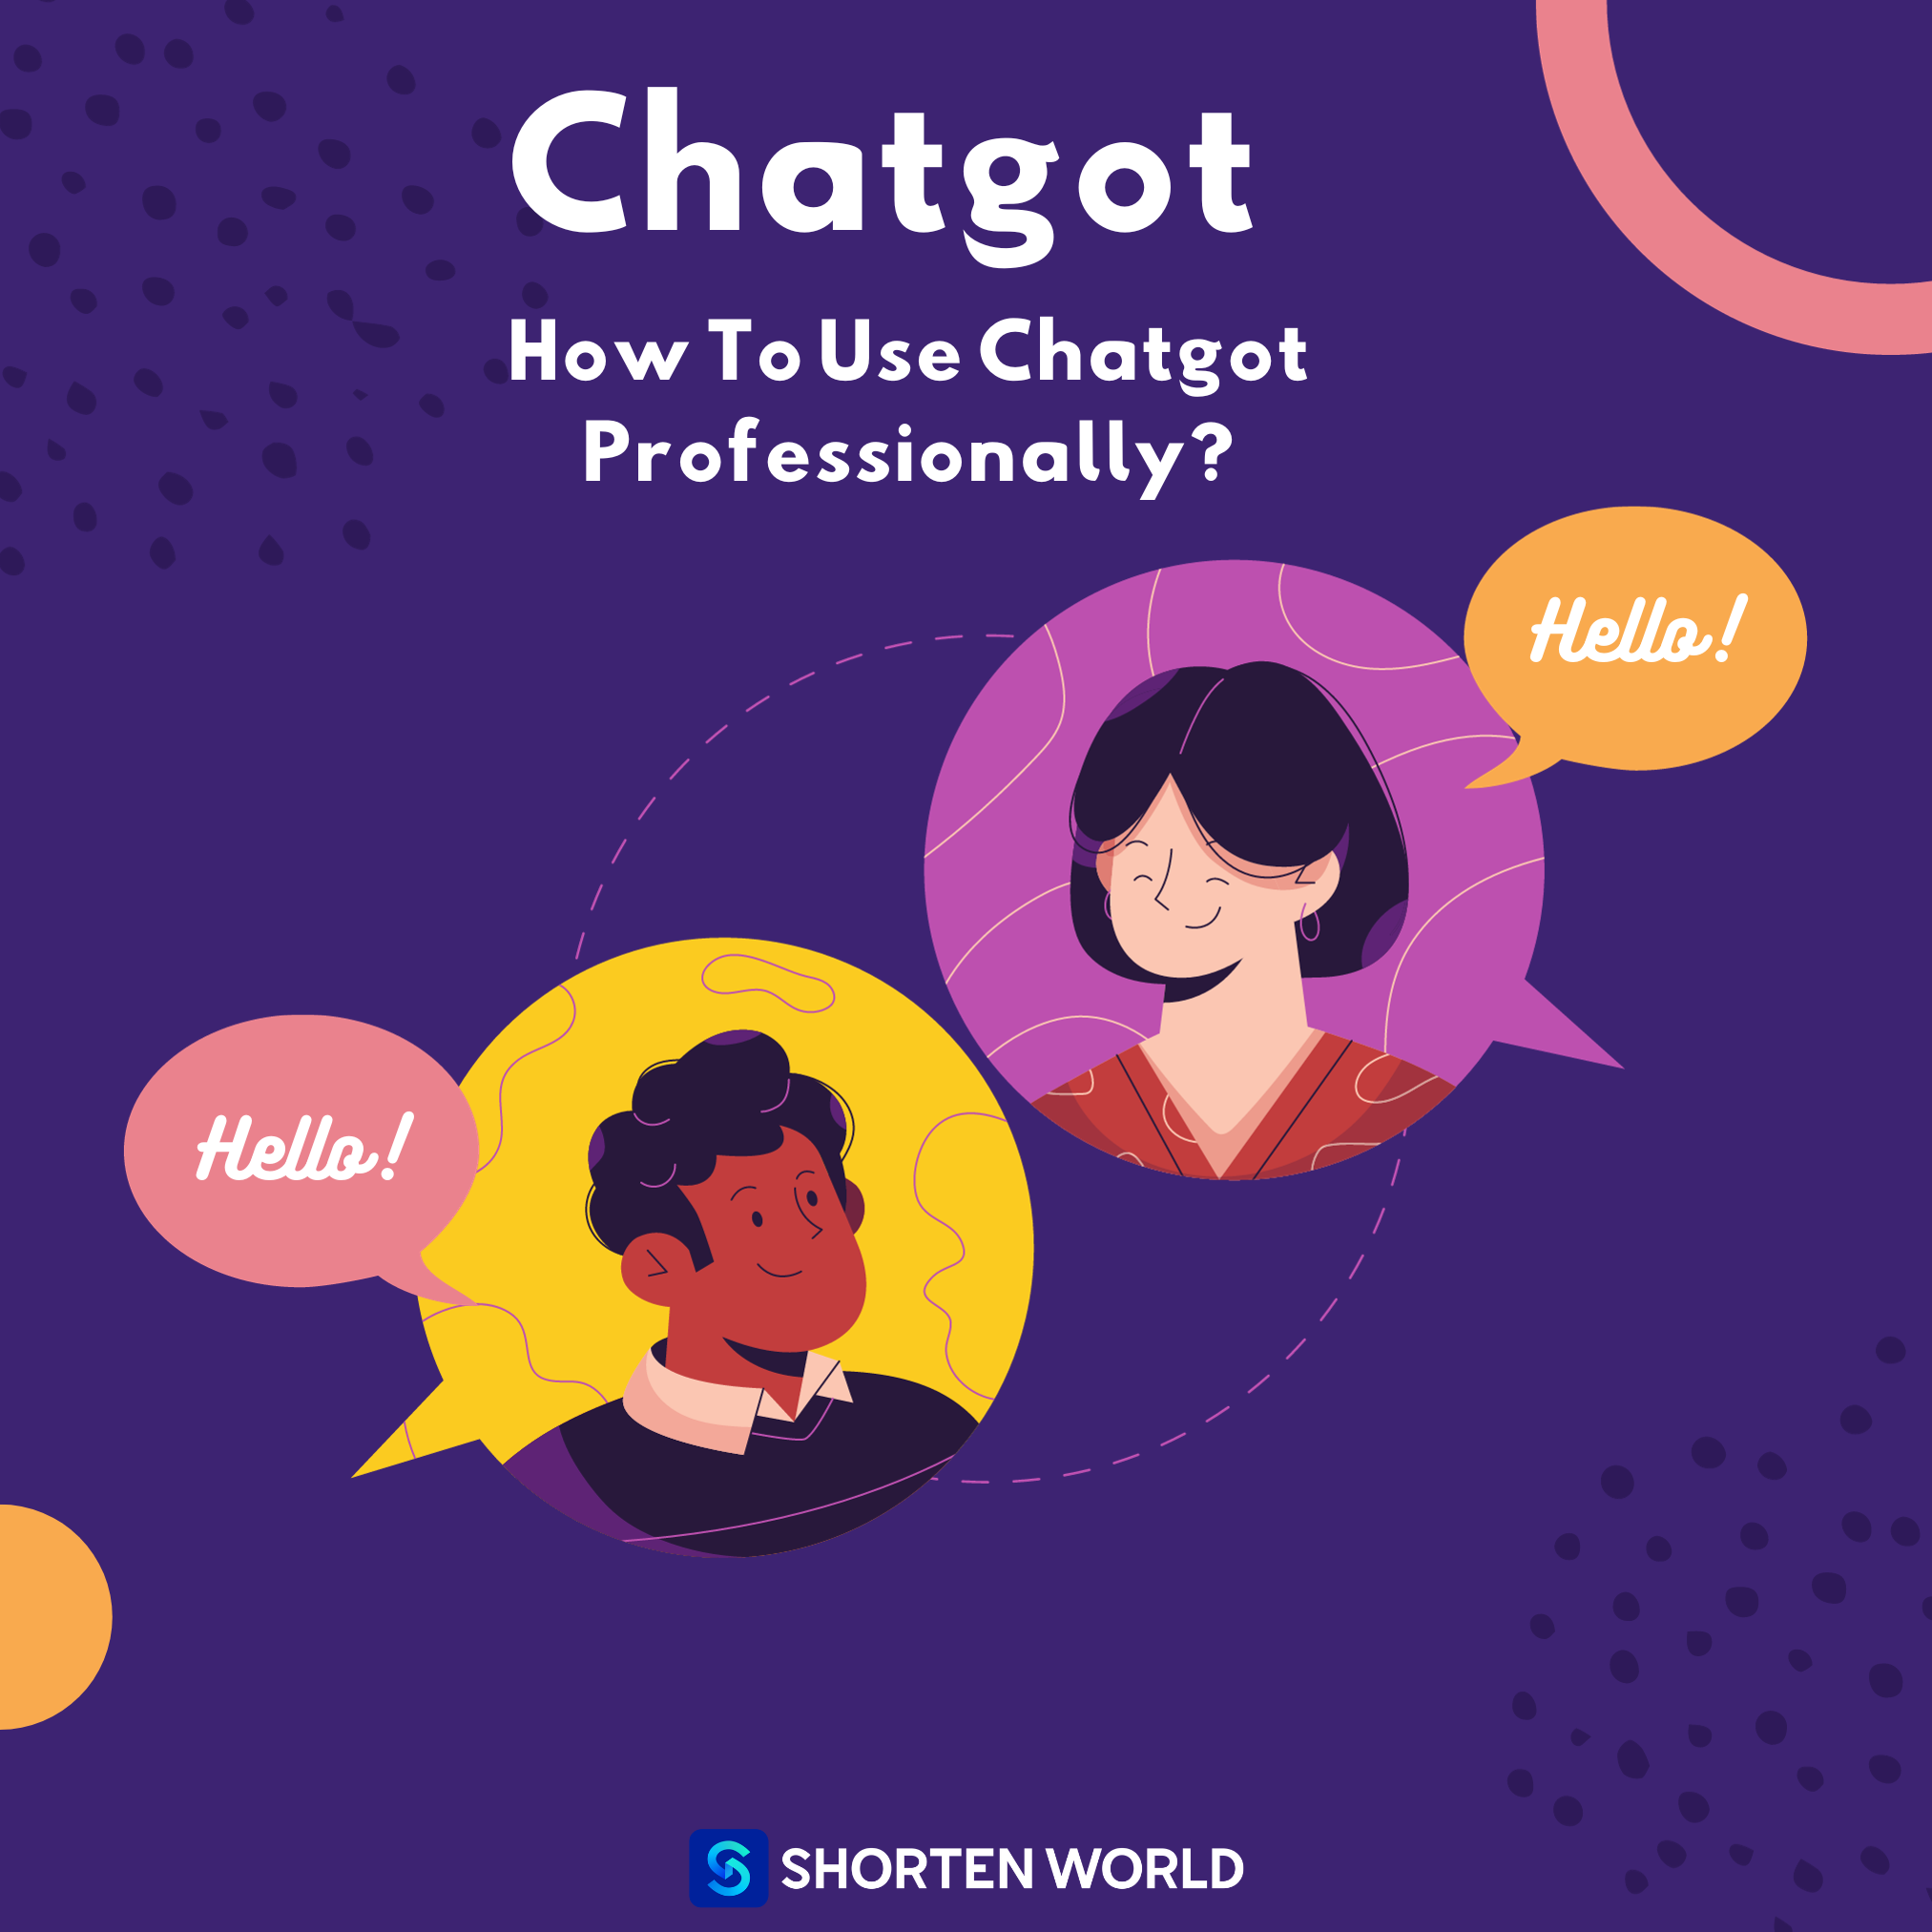 Chatgot: How To Use Chatgot Professionally?